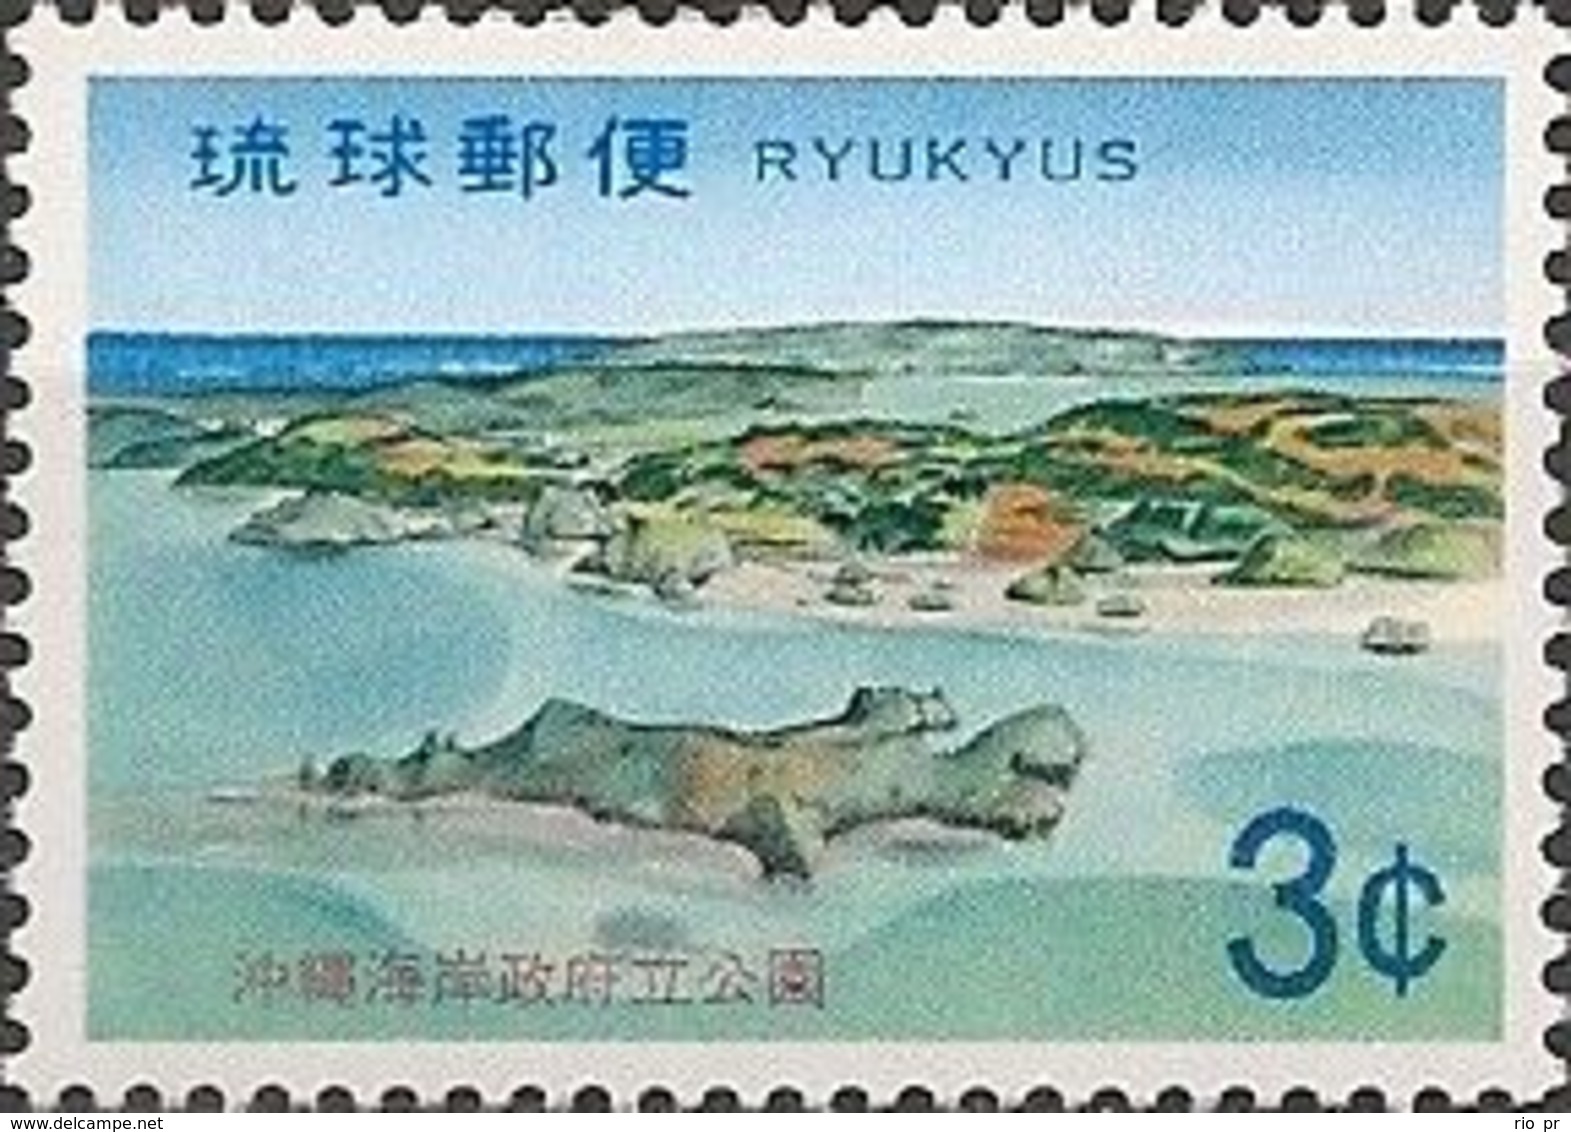 RYUKYU - NATIONAL PARK OF OKINAWA (2nd ISSUE) 1971 - MNH - Ryukyu Islands